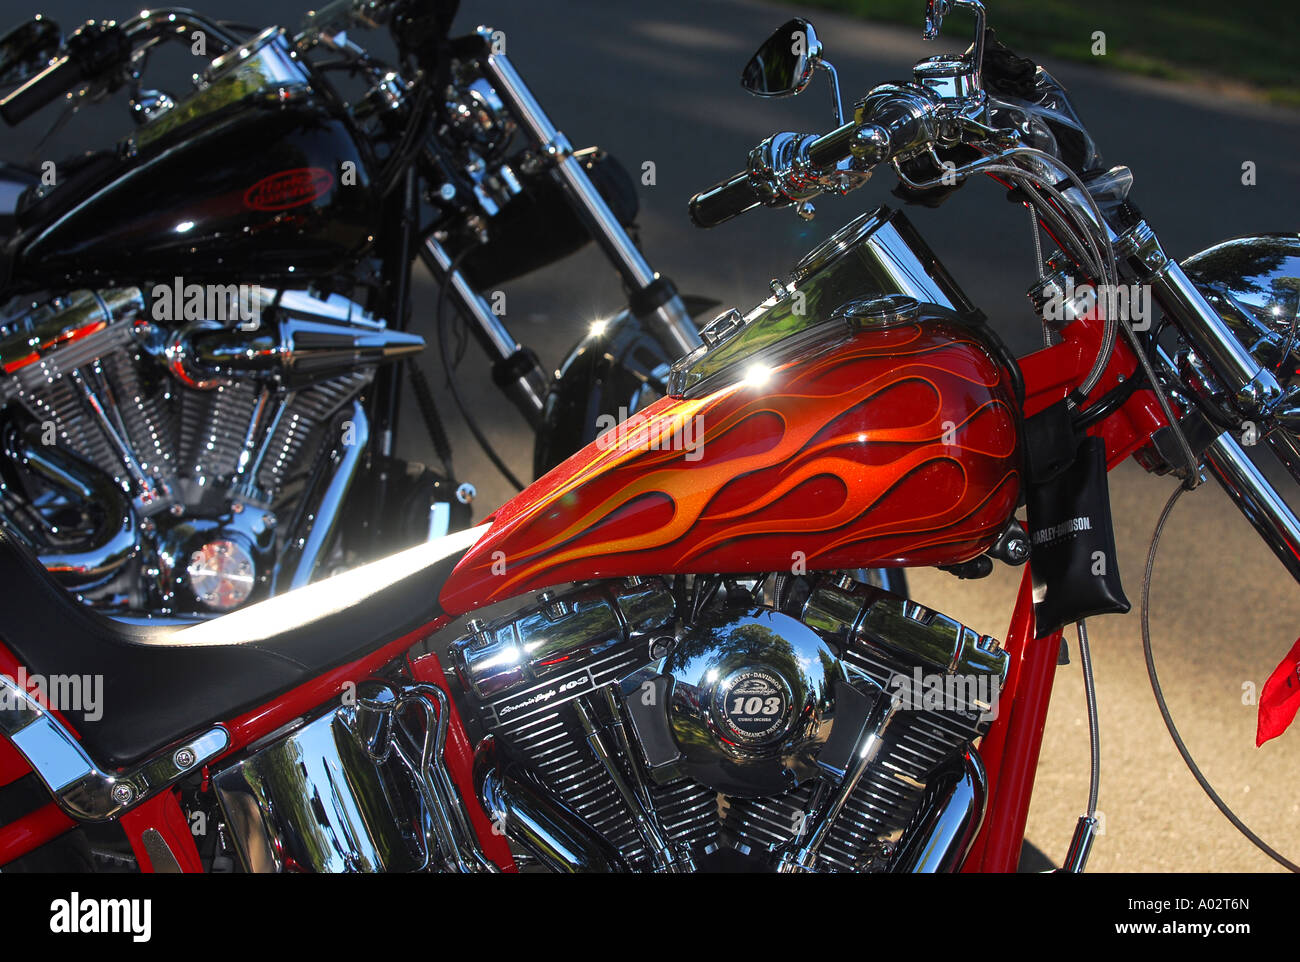 Moto Custom Harley Davidson avec des flammes et chrome Banque D'Images